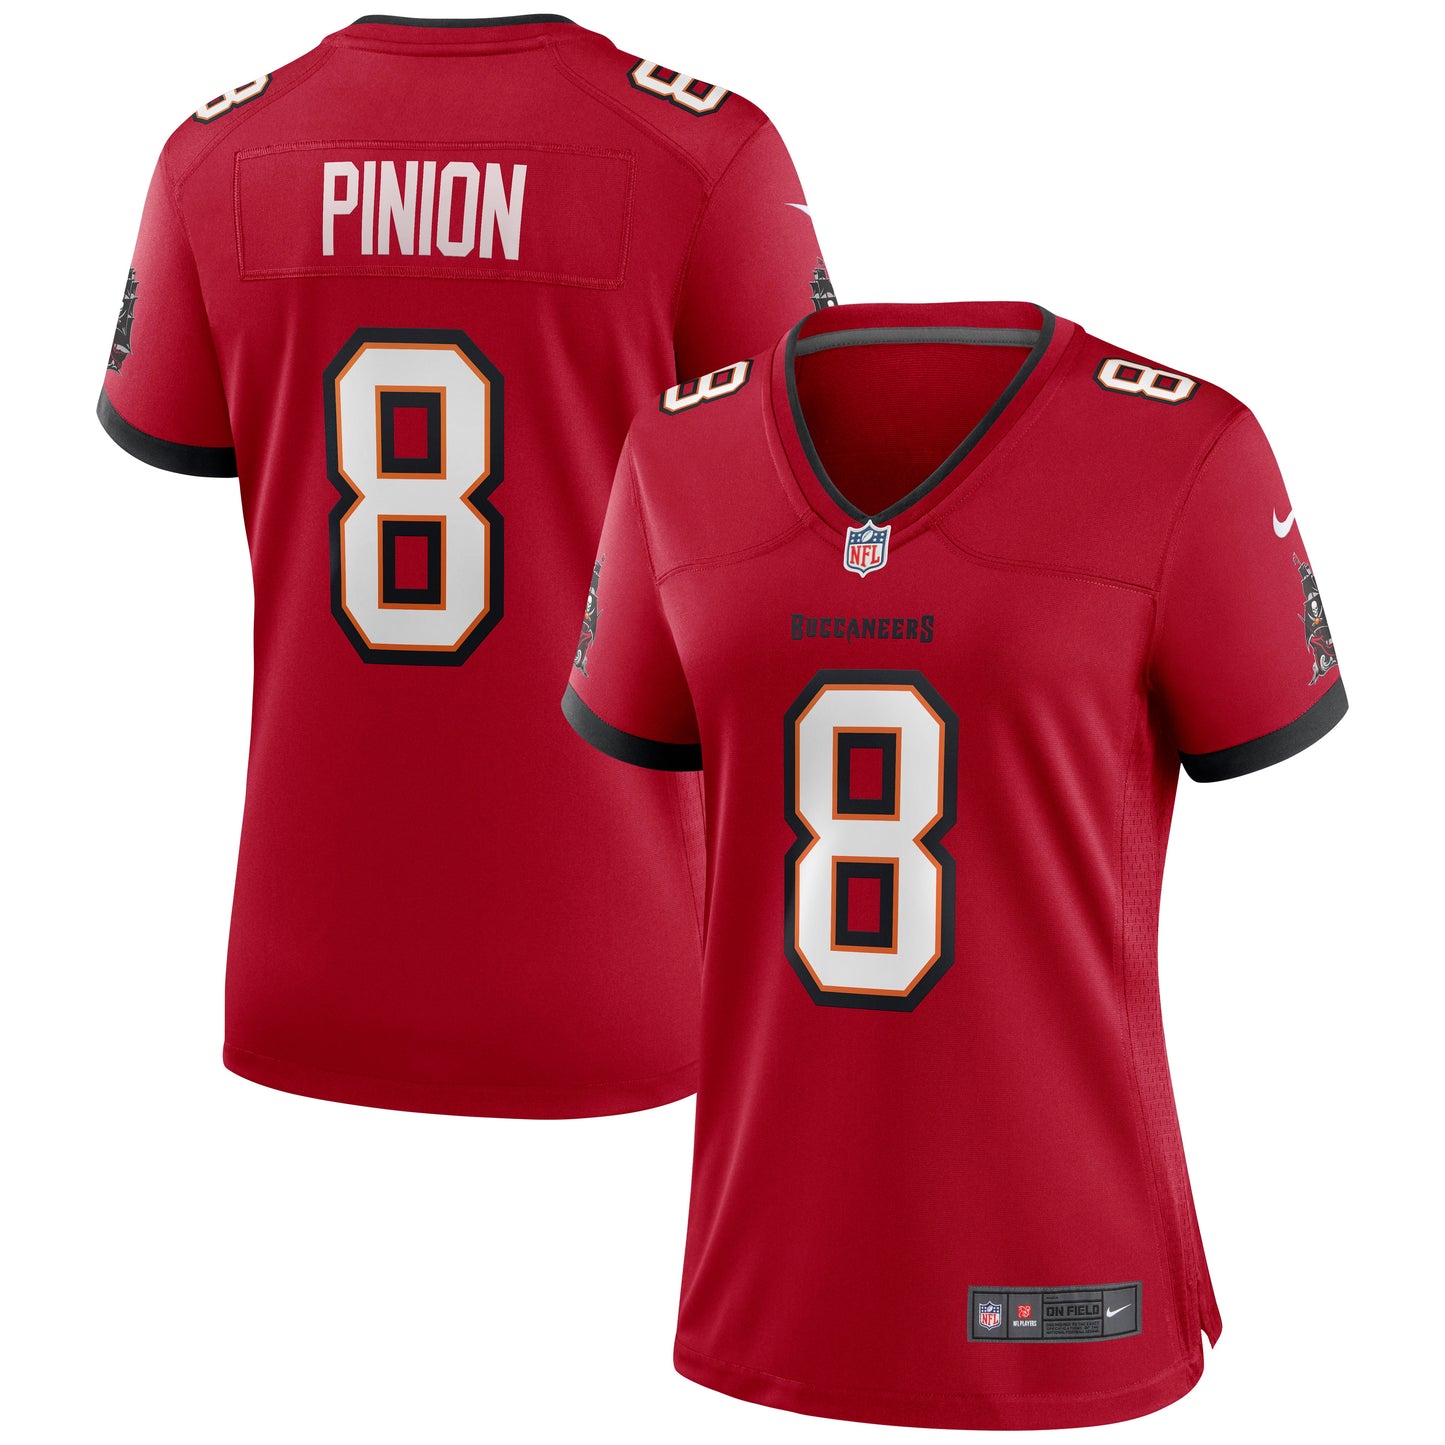 Bradley Pinion Tampa Bay Buccaneers Nike Women's Game Jersey - Red